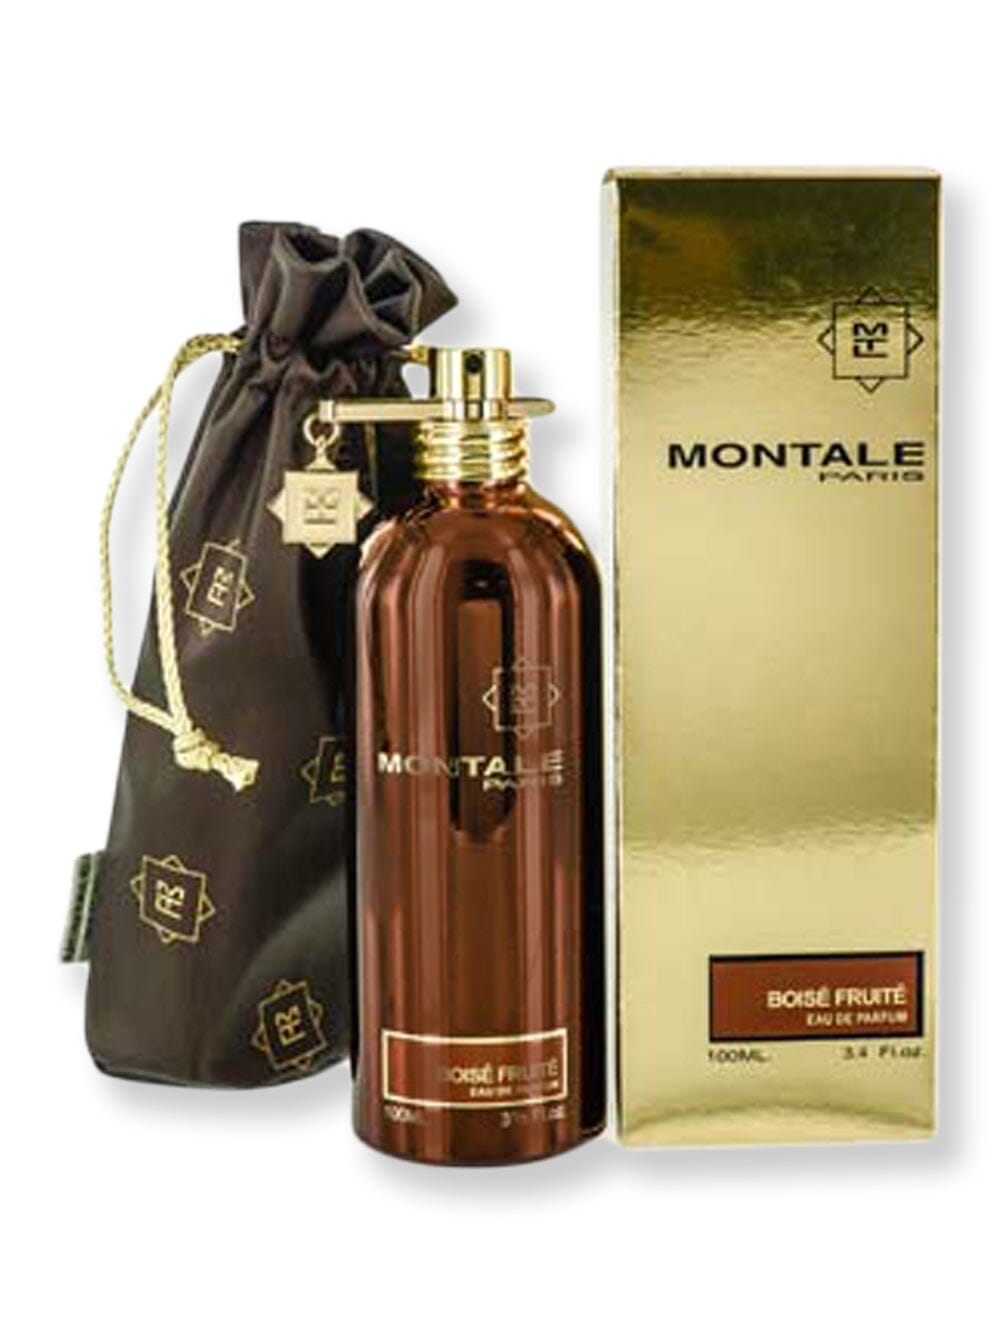 Montale Montale Boise Fruite EDP Spray 3.3 oz100 ml Perfume 